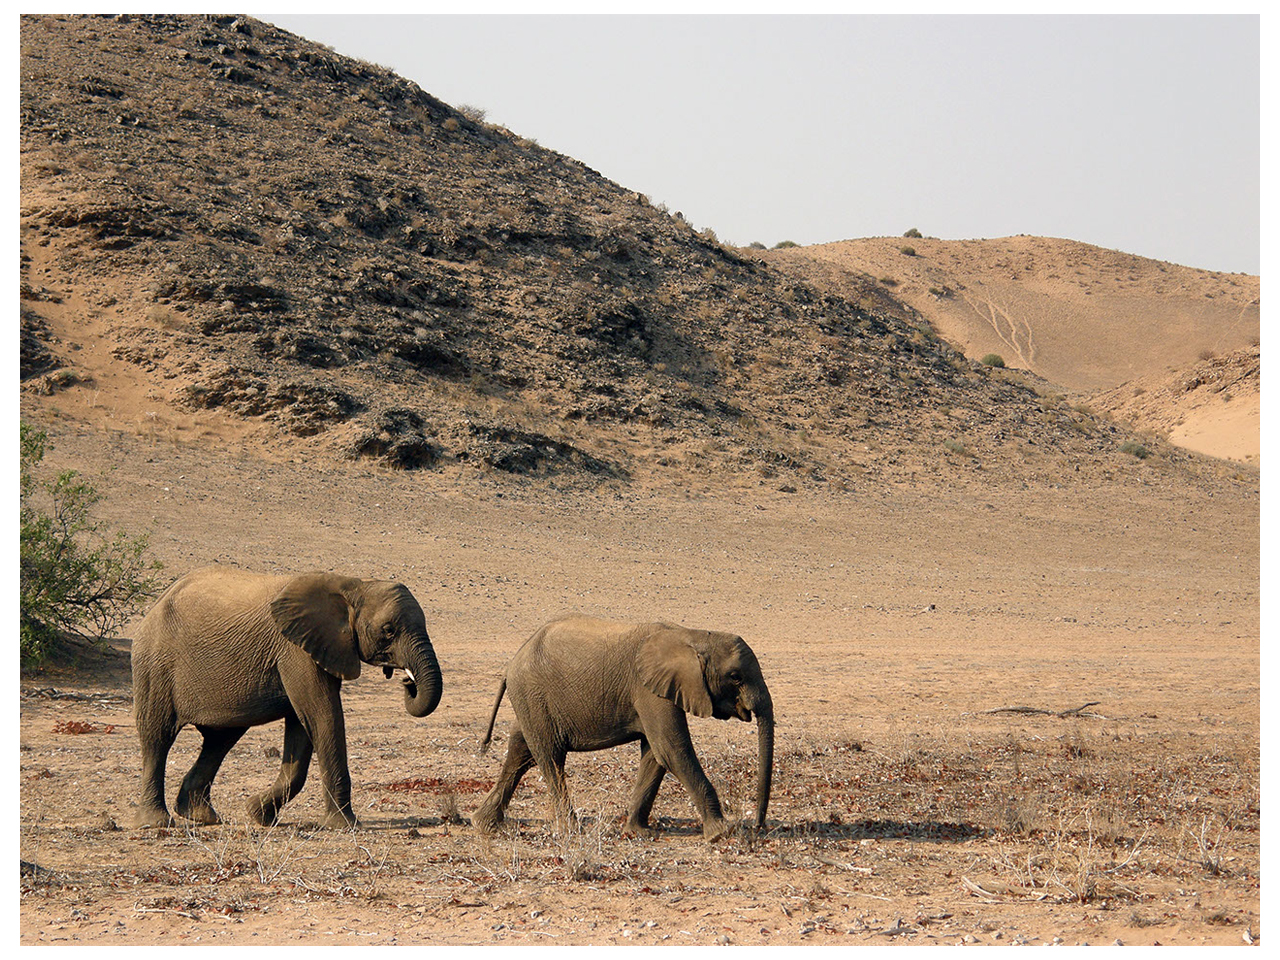 Desert adapted elephants